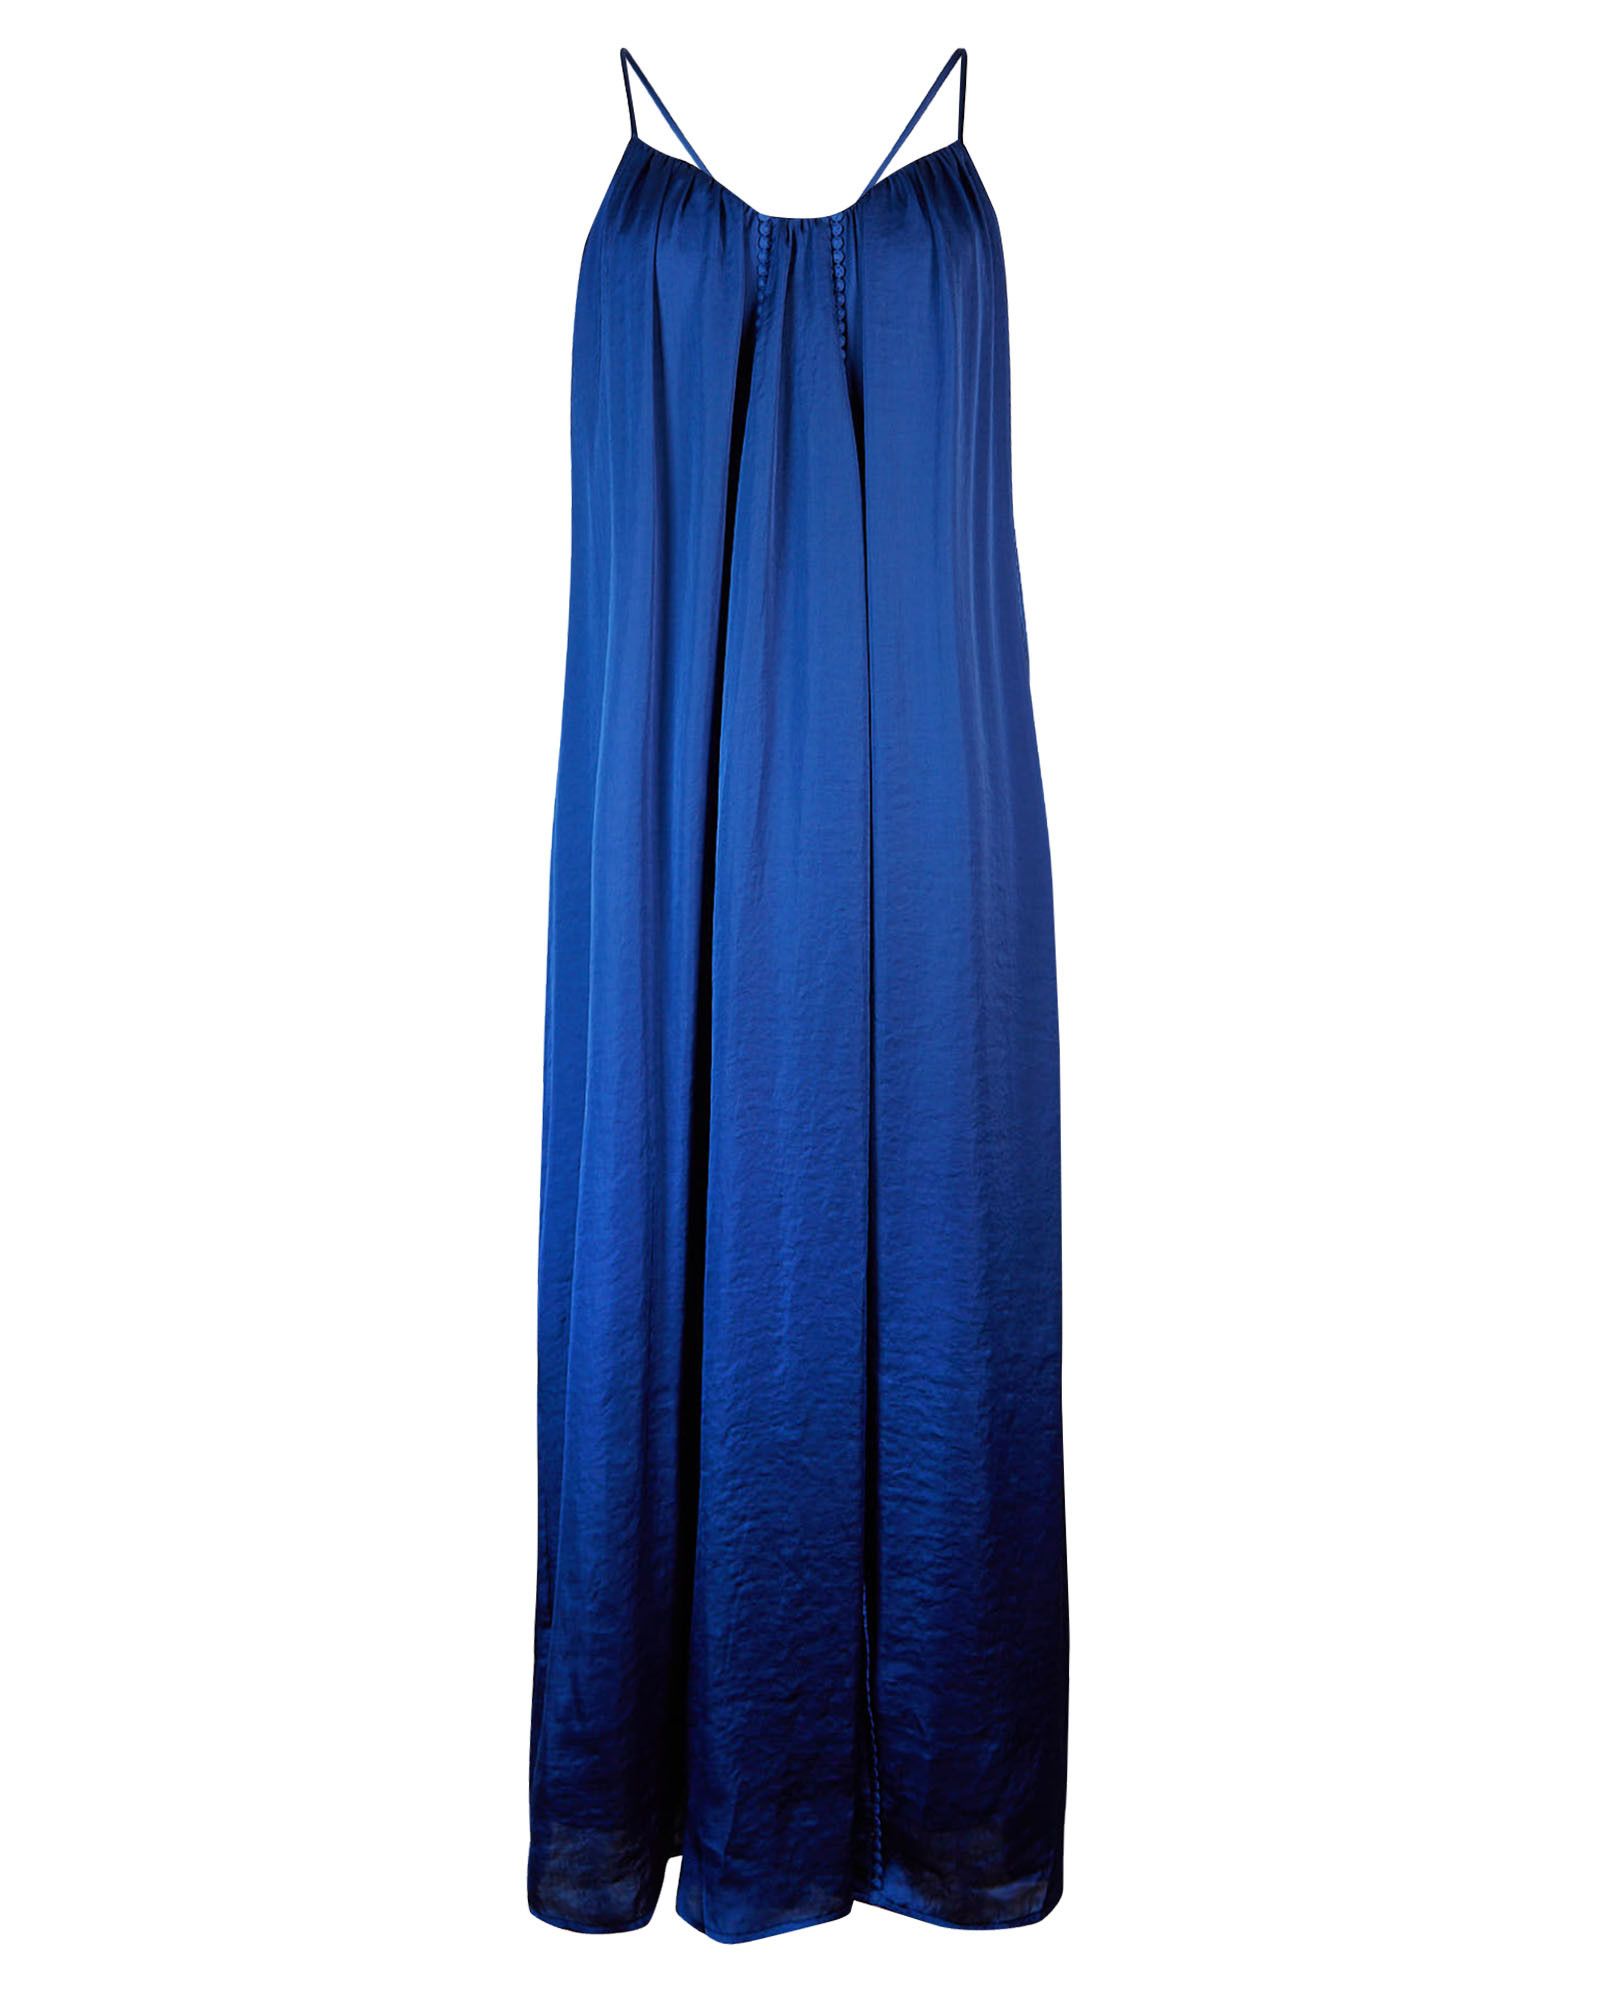 Rosella Matte Satin Blue Flowing Maxi Dress | Oliver Bonas